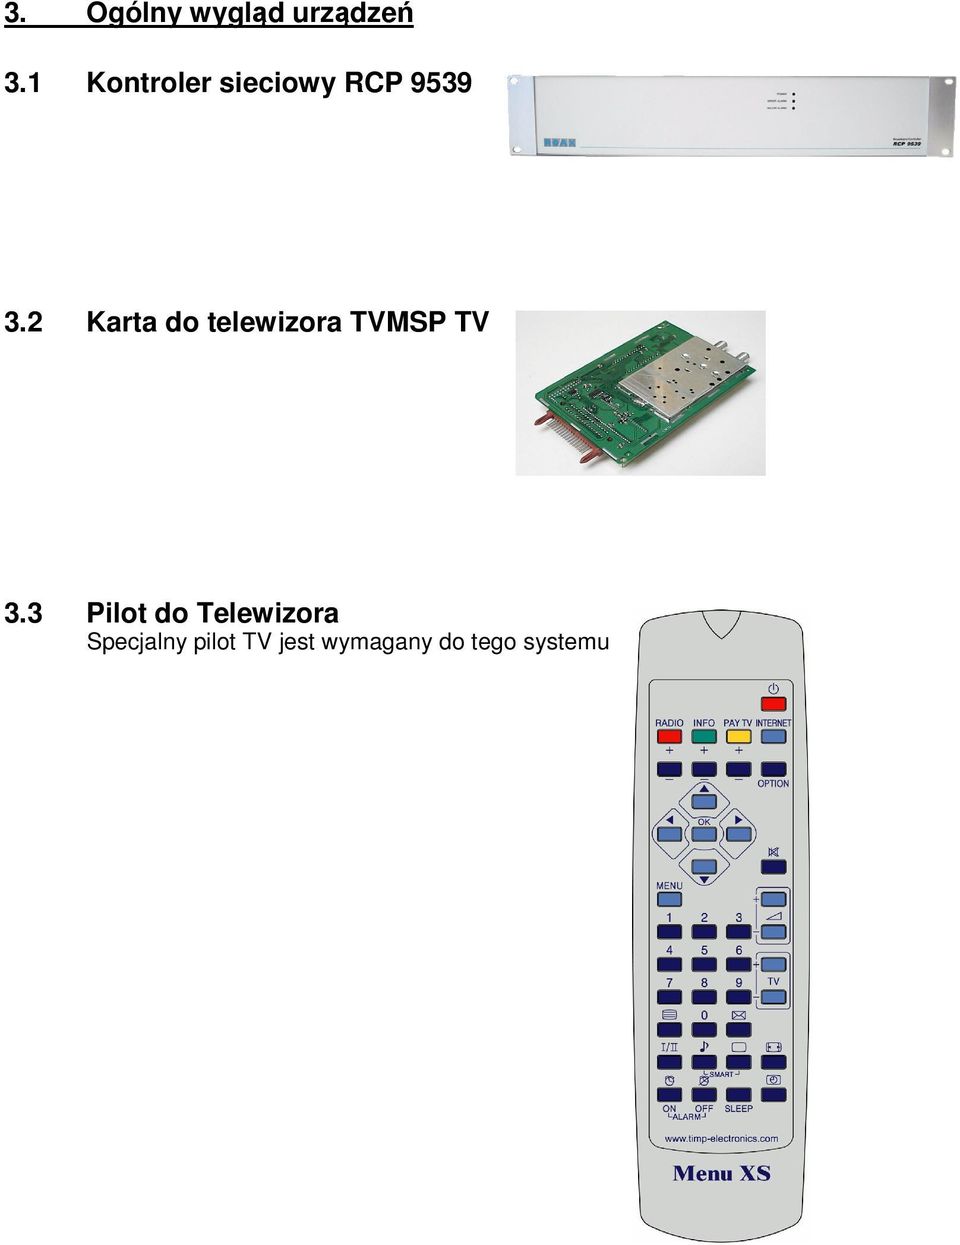 2 Karta do telewizora TVMSP TV 3.